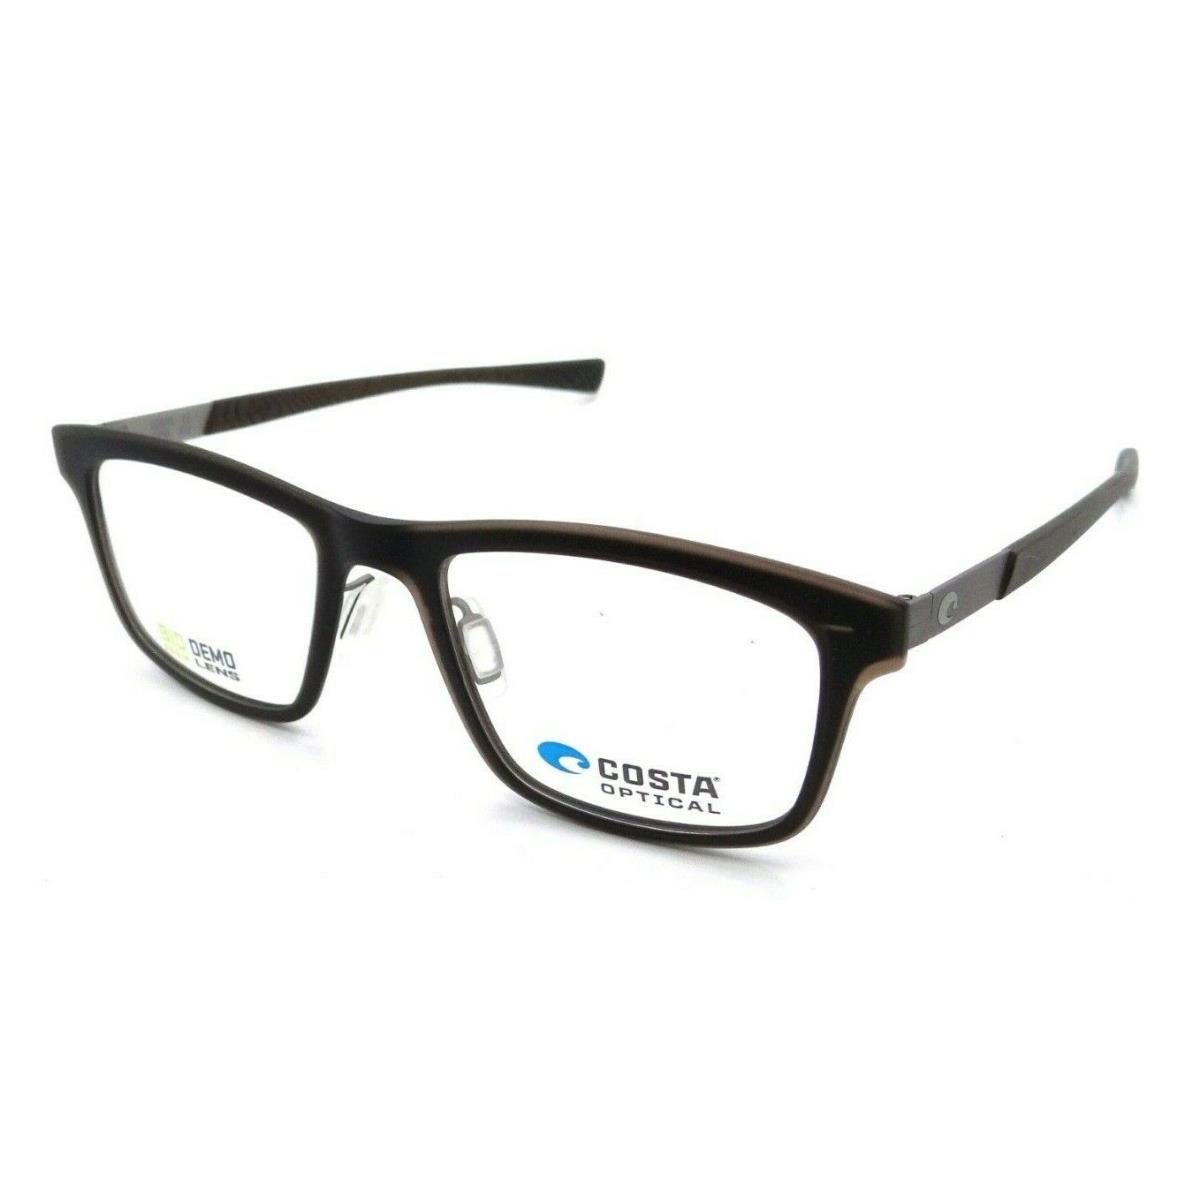 Costa Del Mar Eyeglasses Frame Pacific Rise 300 51-19-140 Translucent Dark Brown